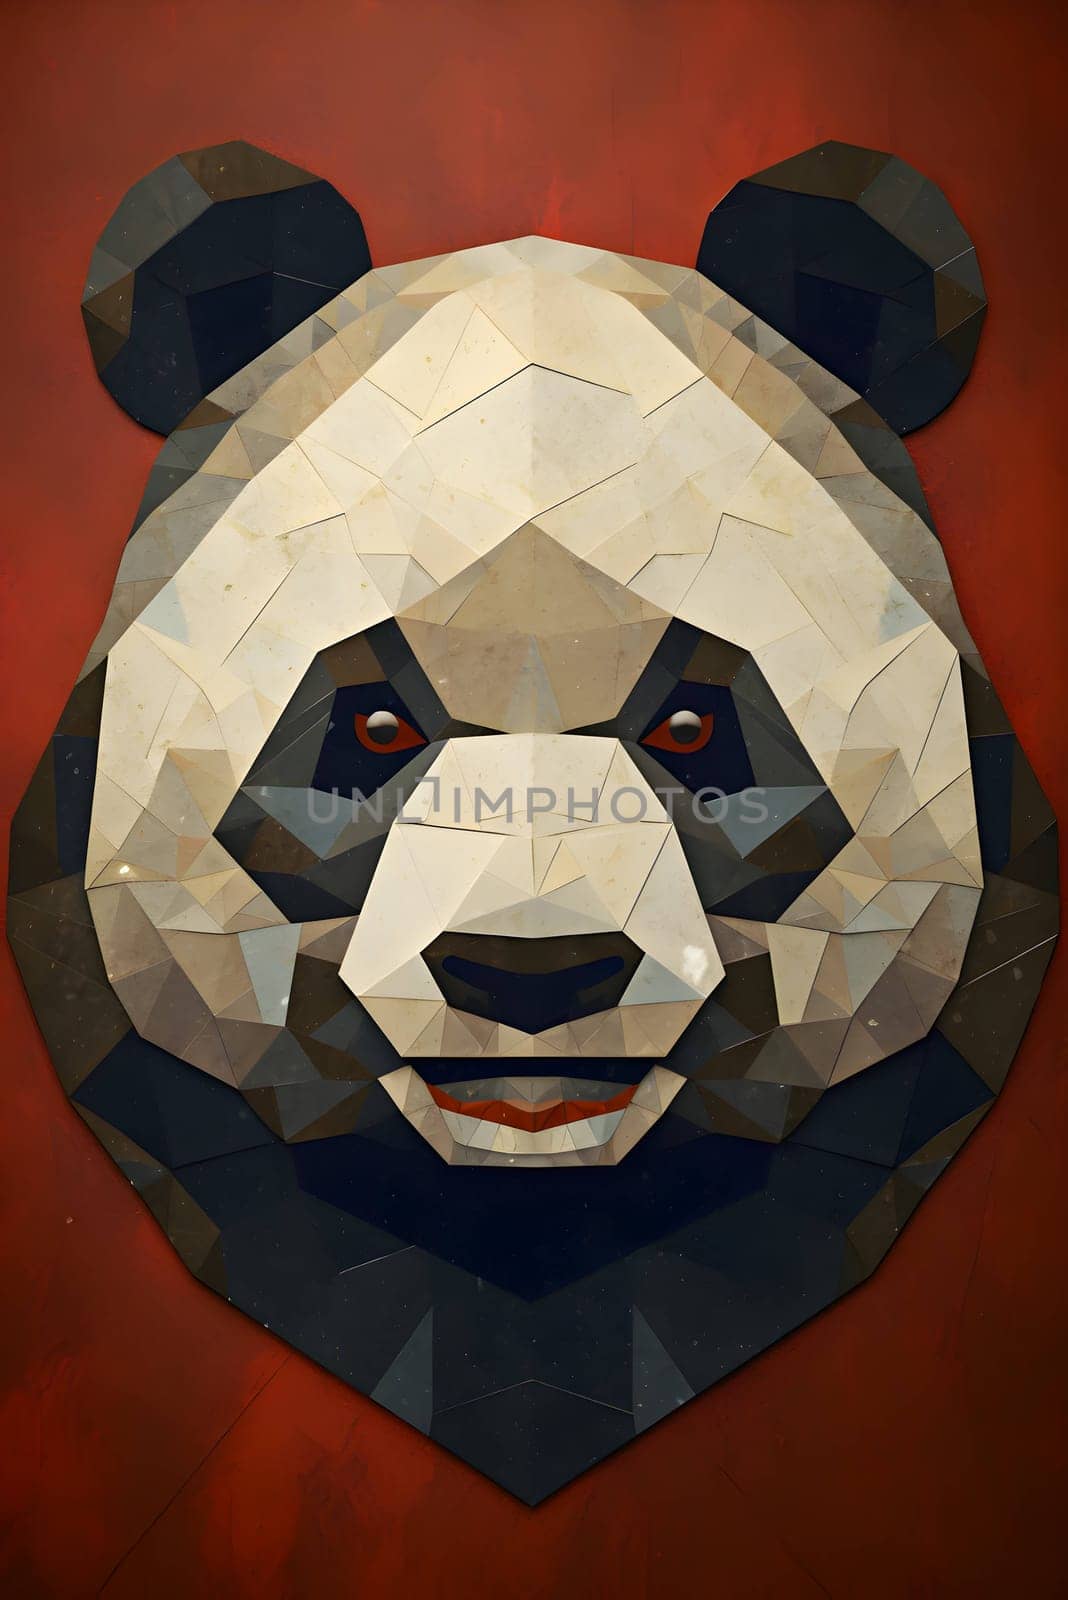 Abstract illustration: Panda head. Polygonal illustration of a panda head